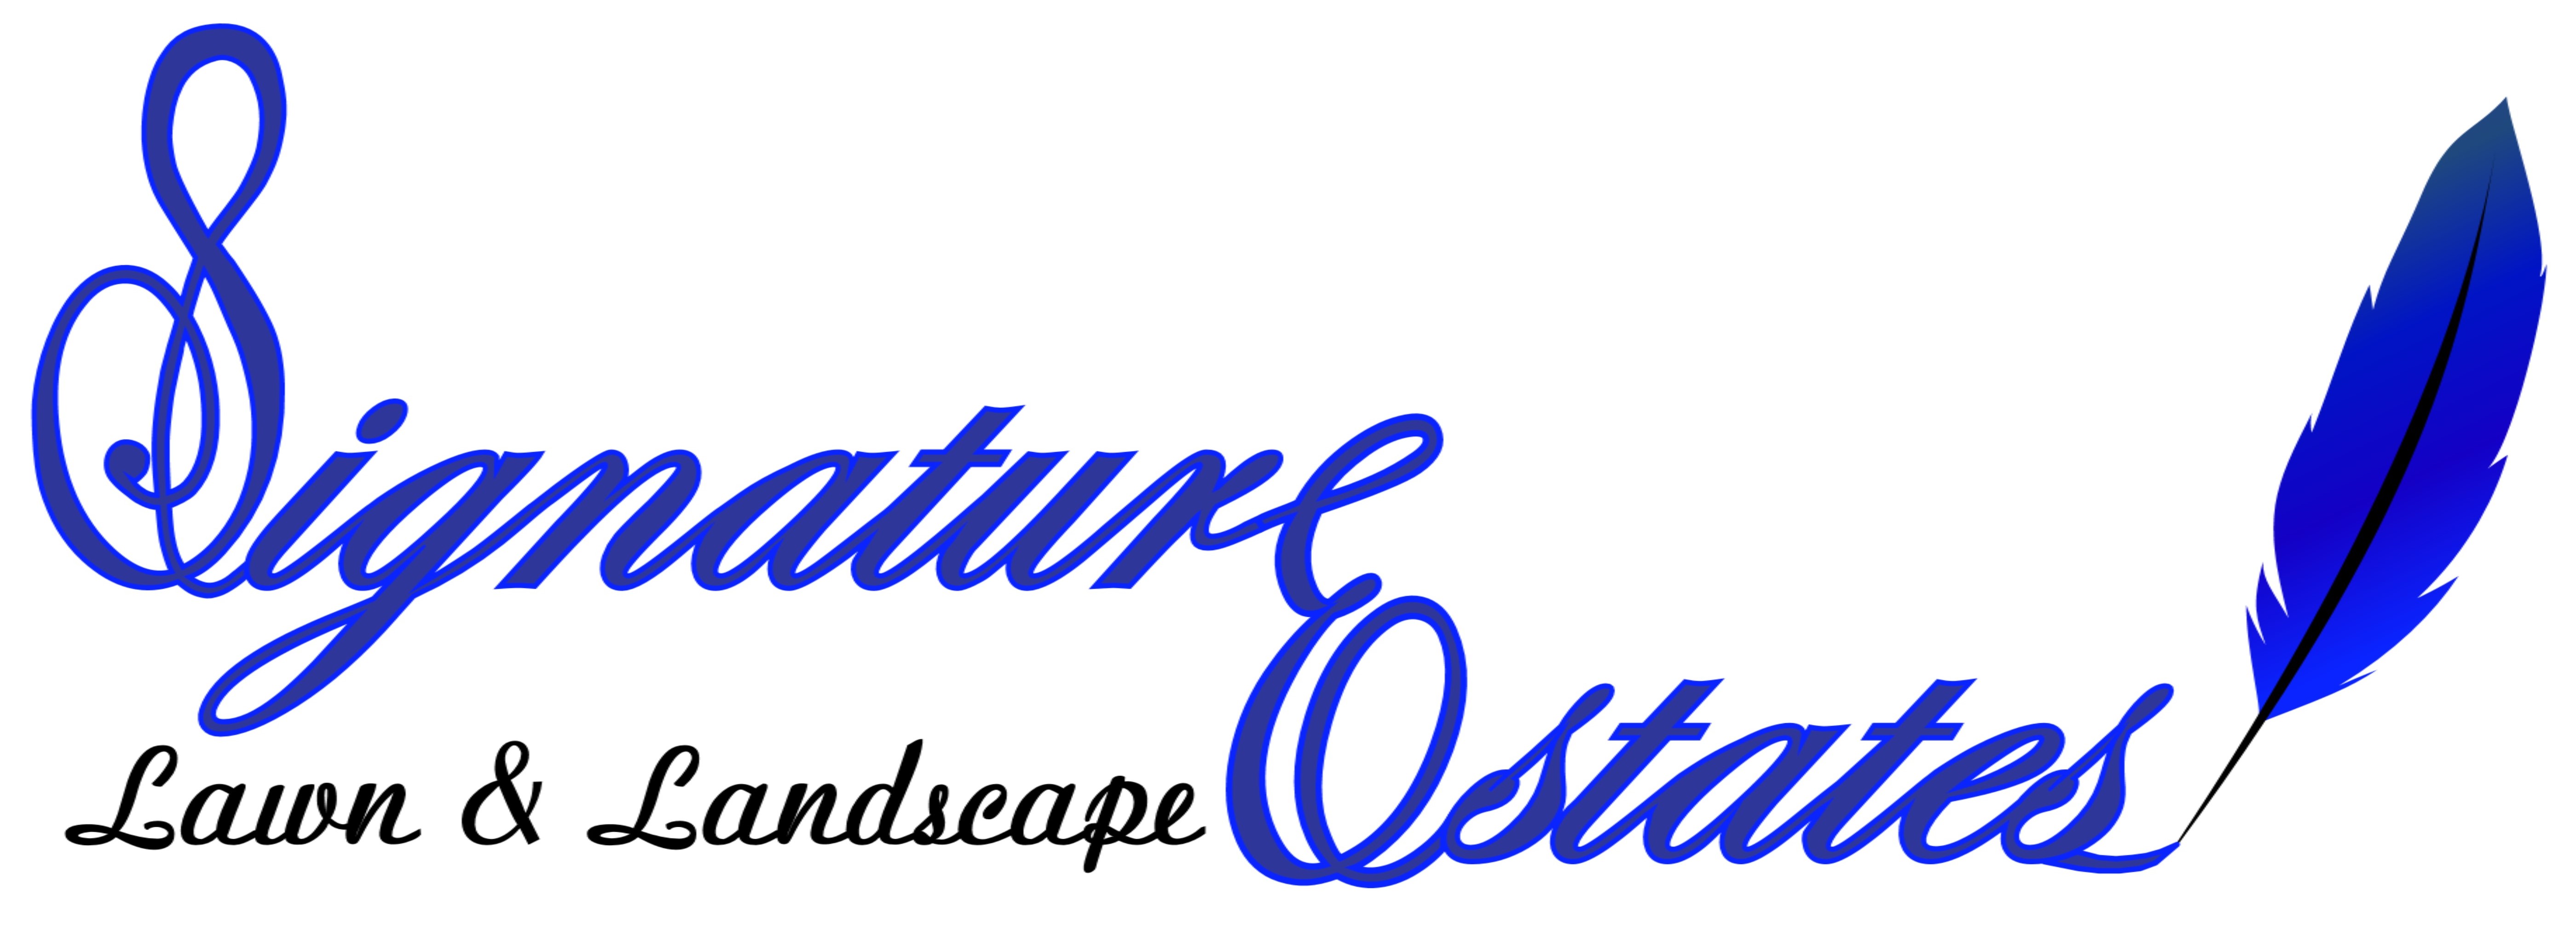 SignaturEstates Lawn & Landscape, LLC Logo